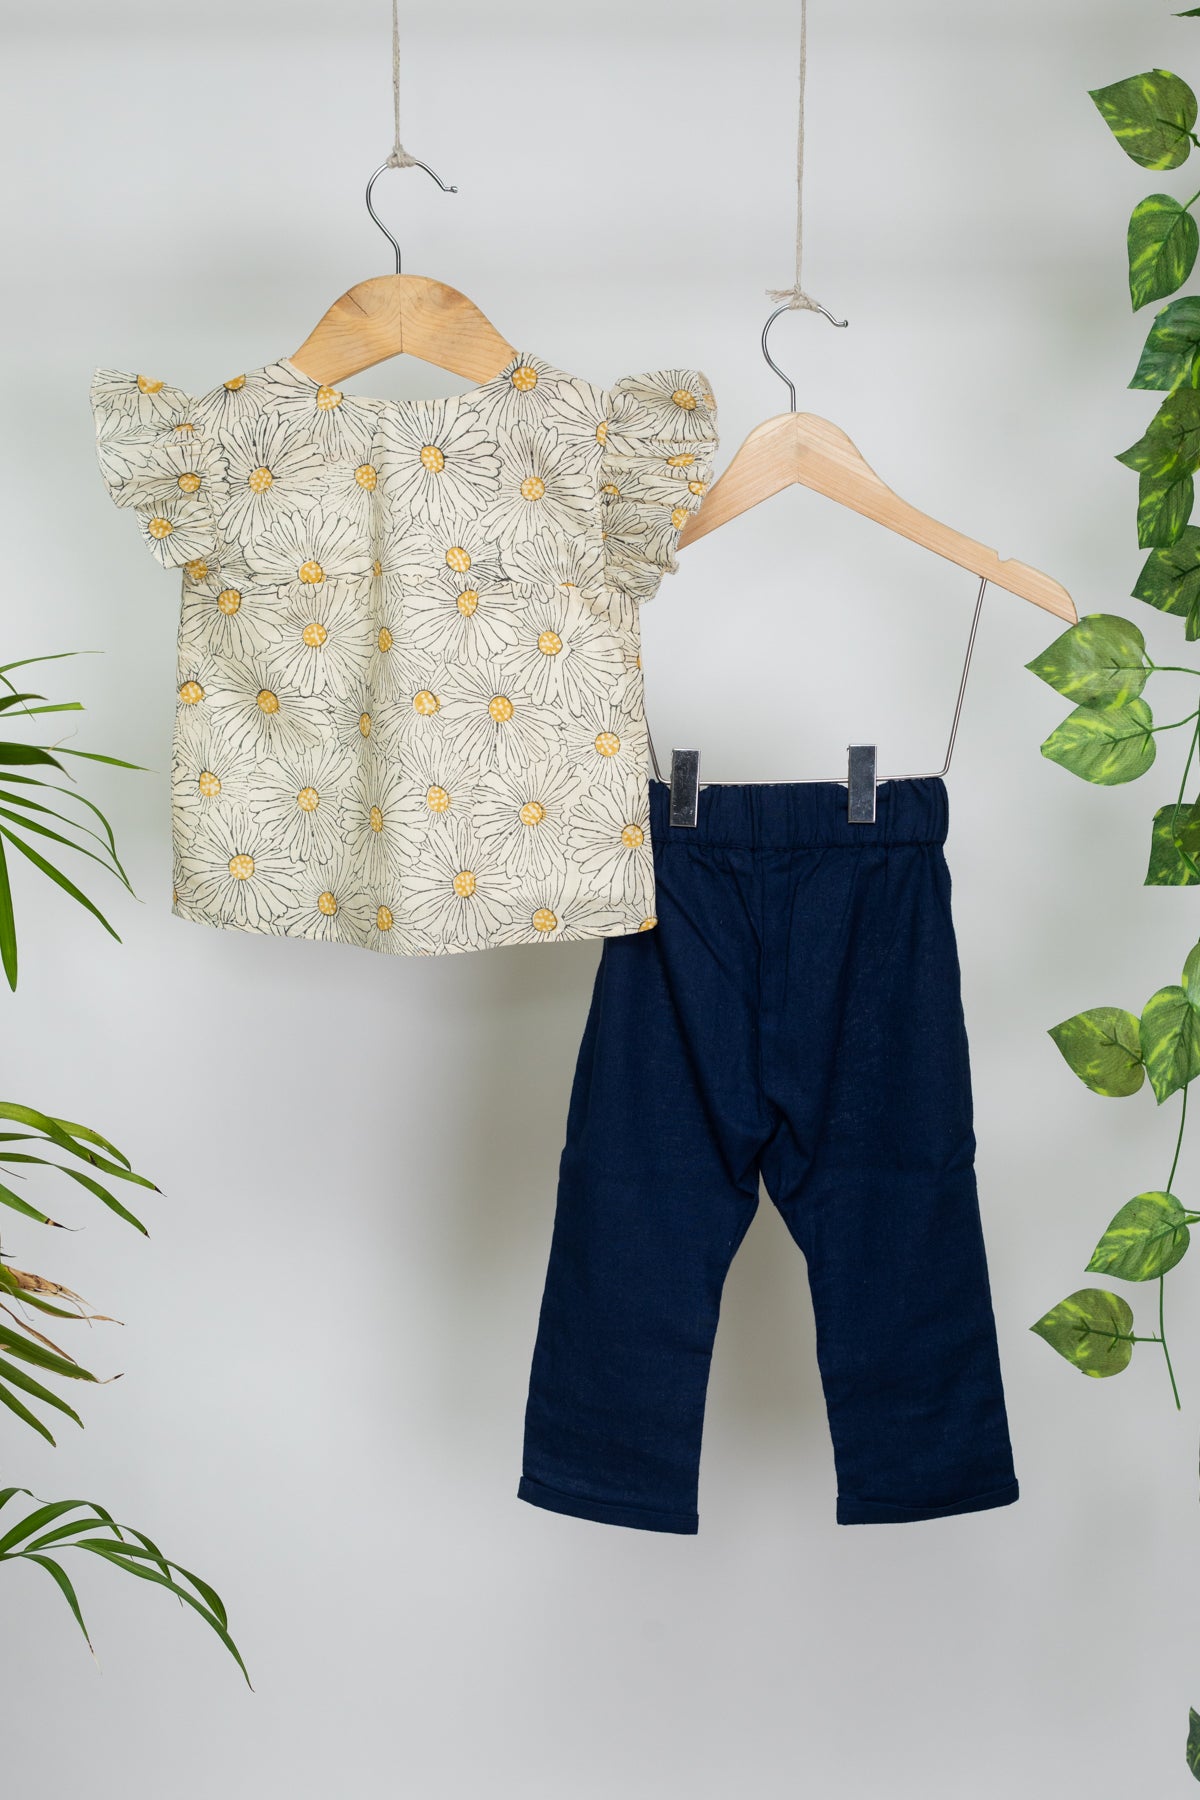 ZoZo Sunflower Print Ruffle Sleeve Top and Blue Pants for Kids